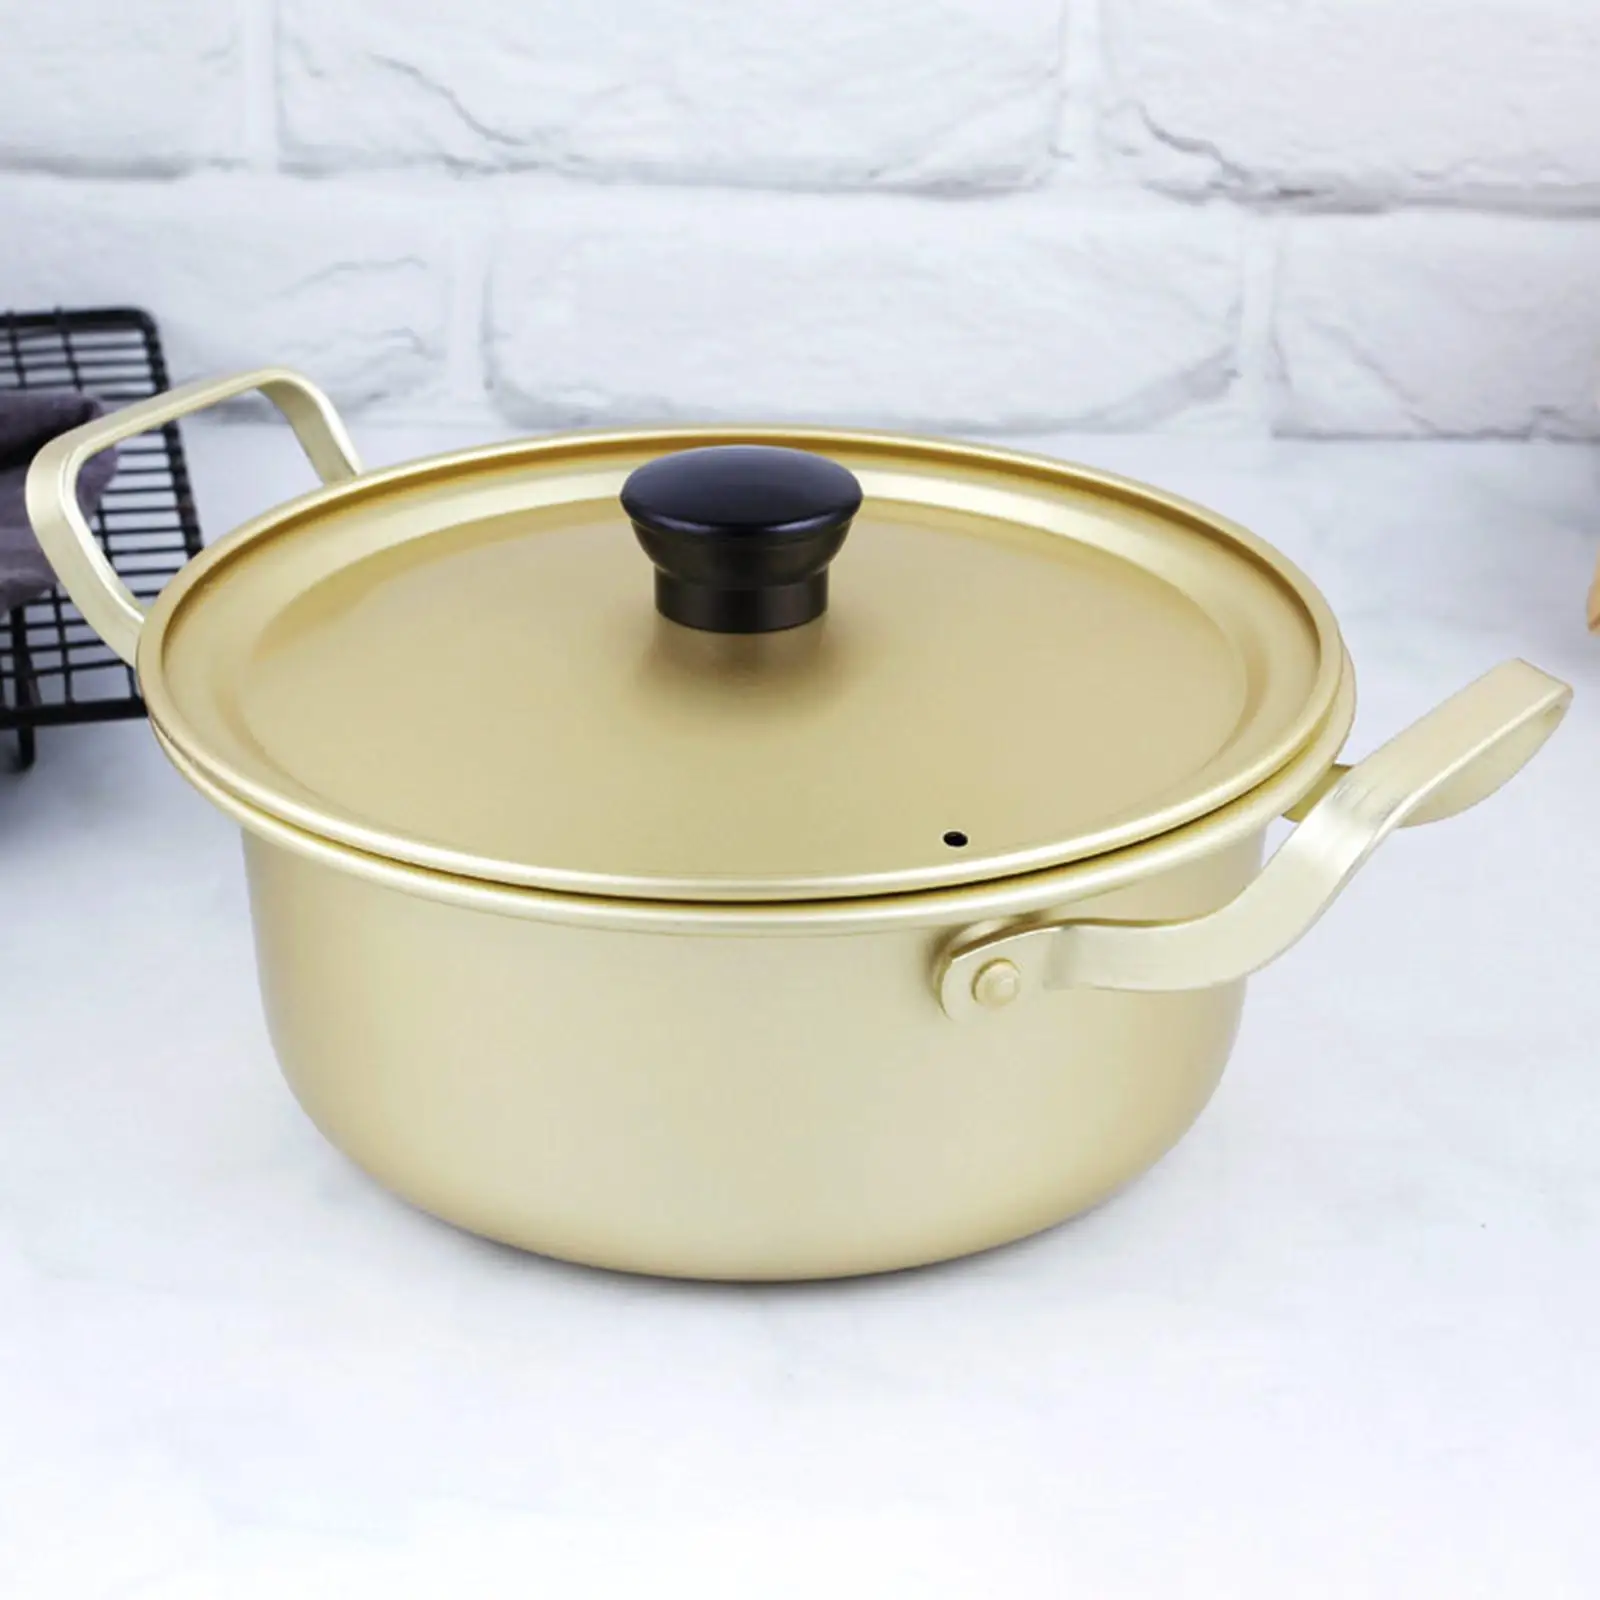 Korean Ramen Noodle Pot Aluminum Stockpot Soup Pot Small Hot Pot W/ Lid Instant Fast Heating Noodle Cooking Pan Kitchen Cookware